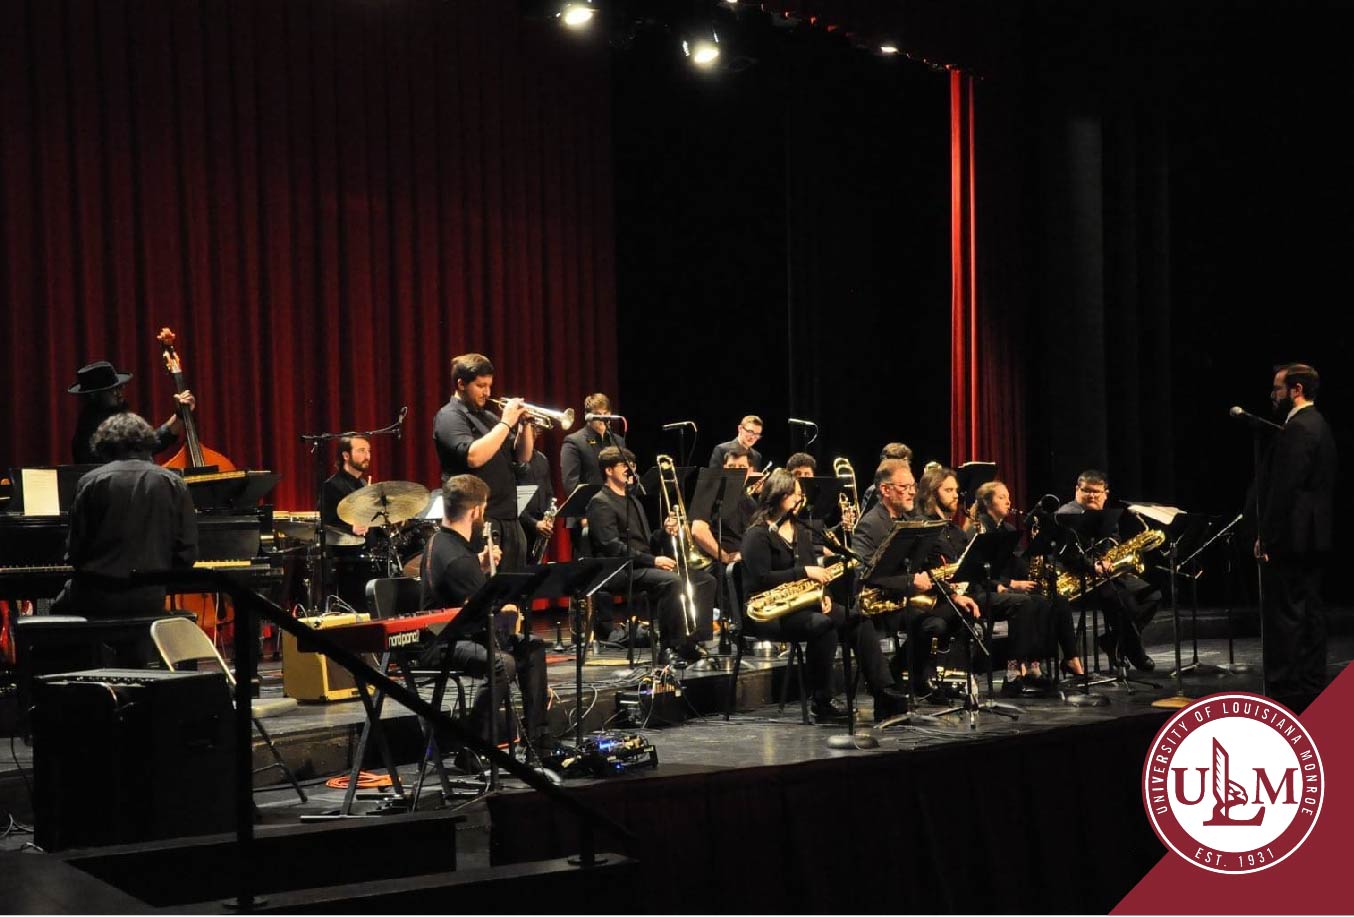 ULM Jazz Ensemble presents "As Seen on TV!" Fall Concert on Sept. 28